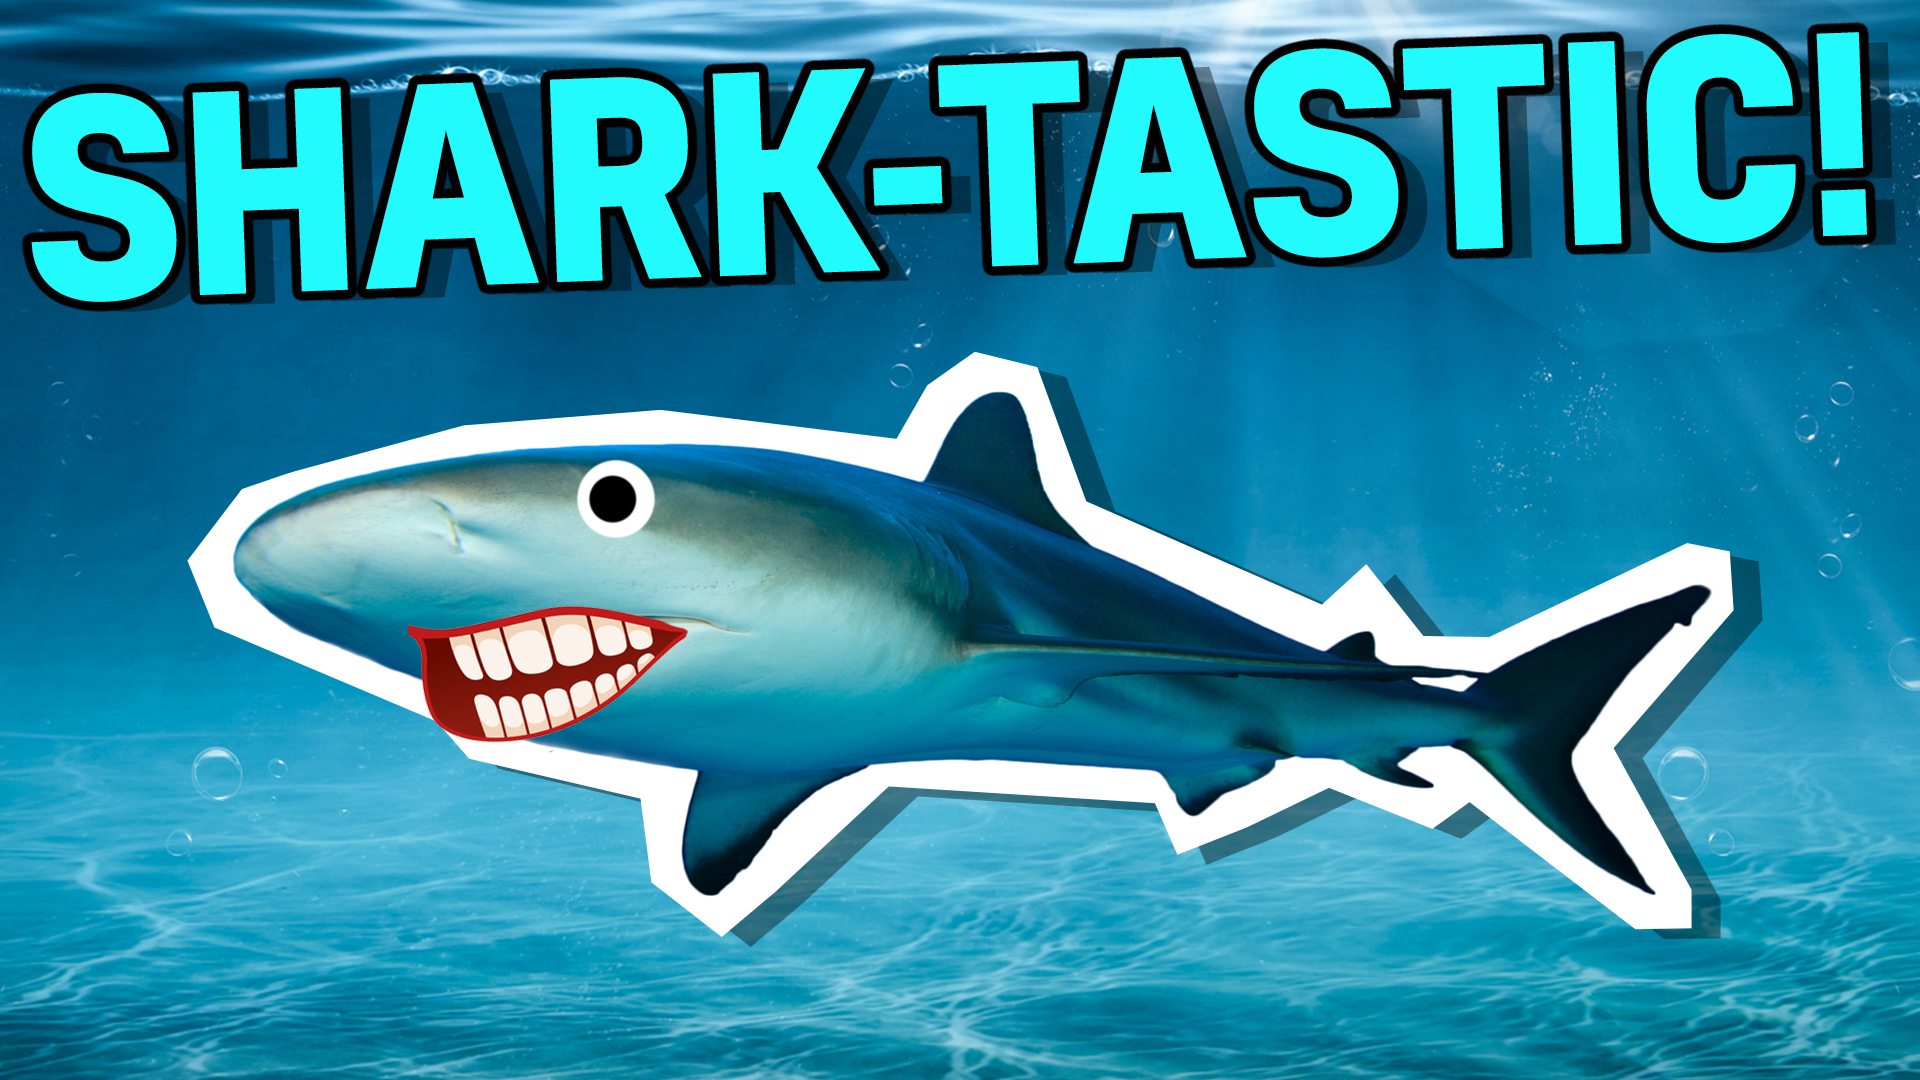 Shark-tastic!